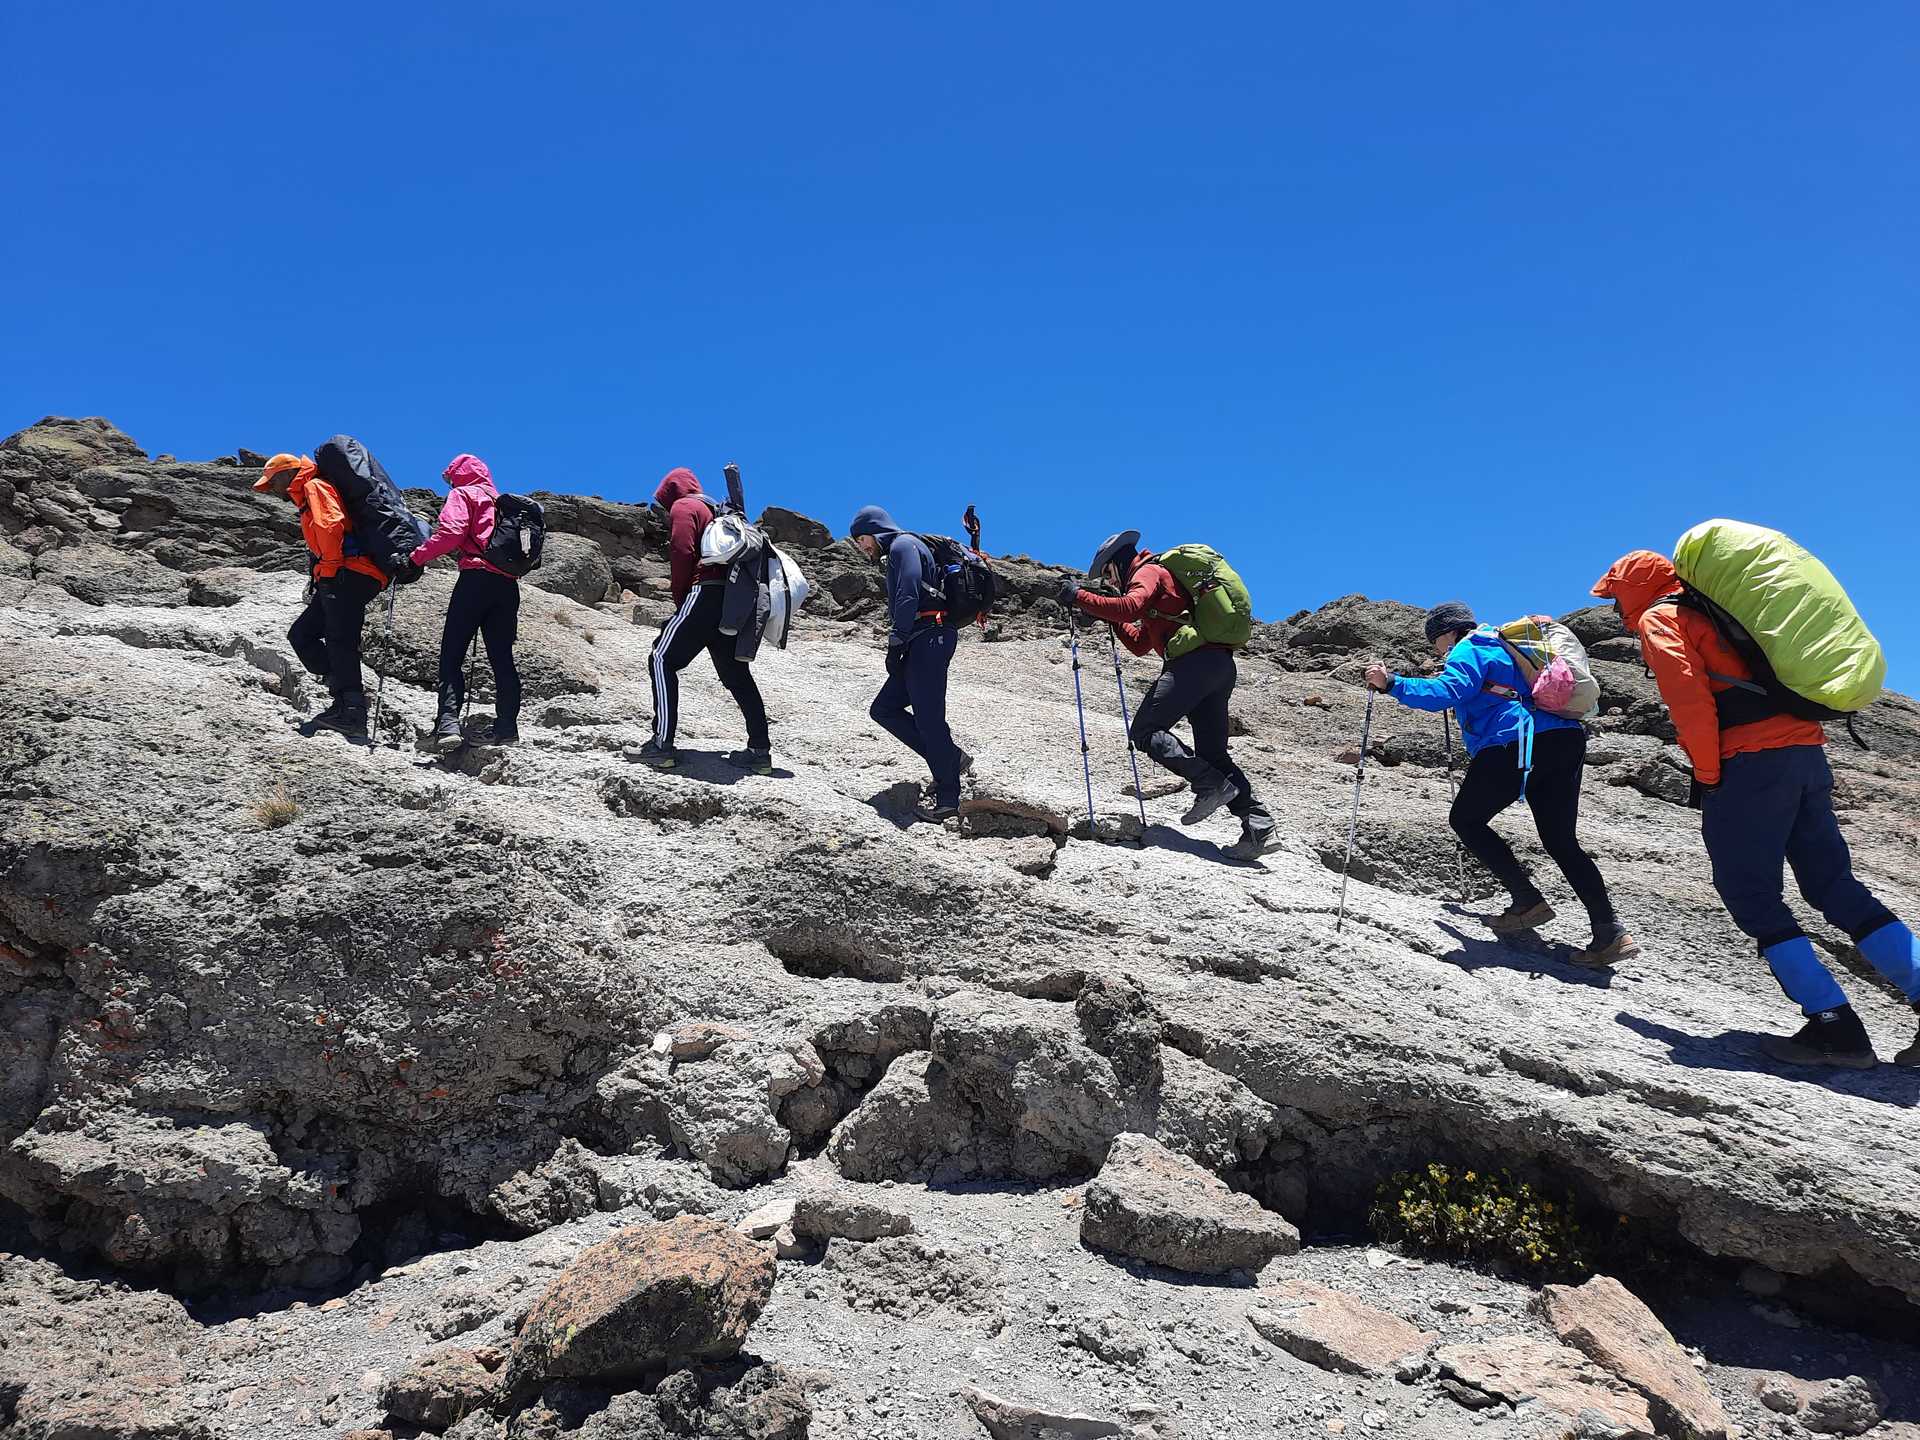 Comprehensive guide to climbing Mount Kilimanjaro